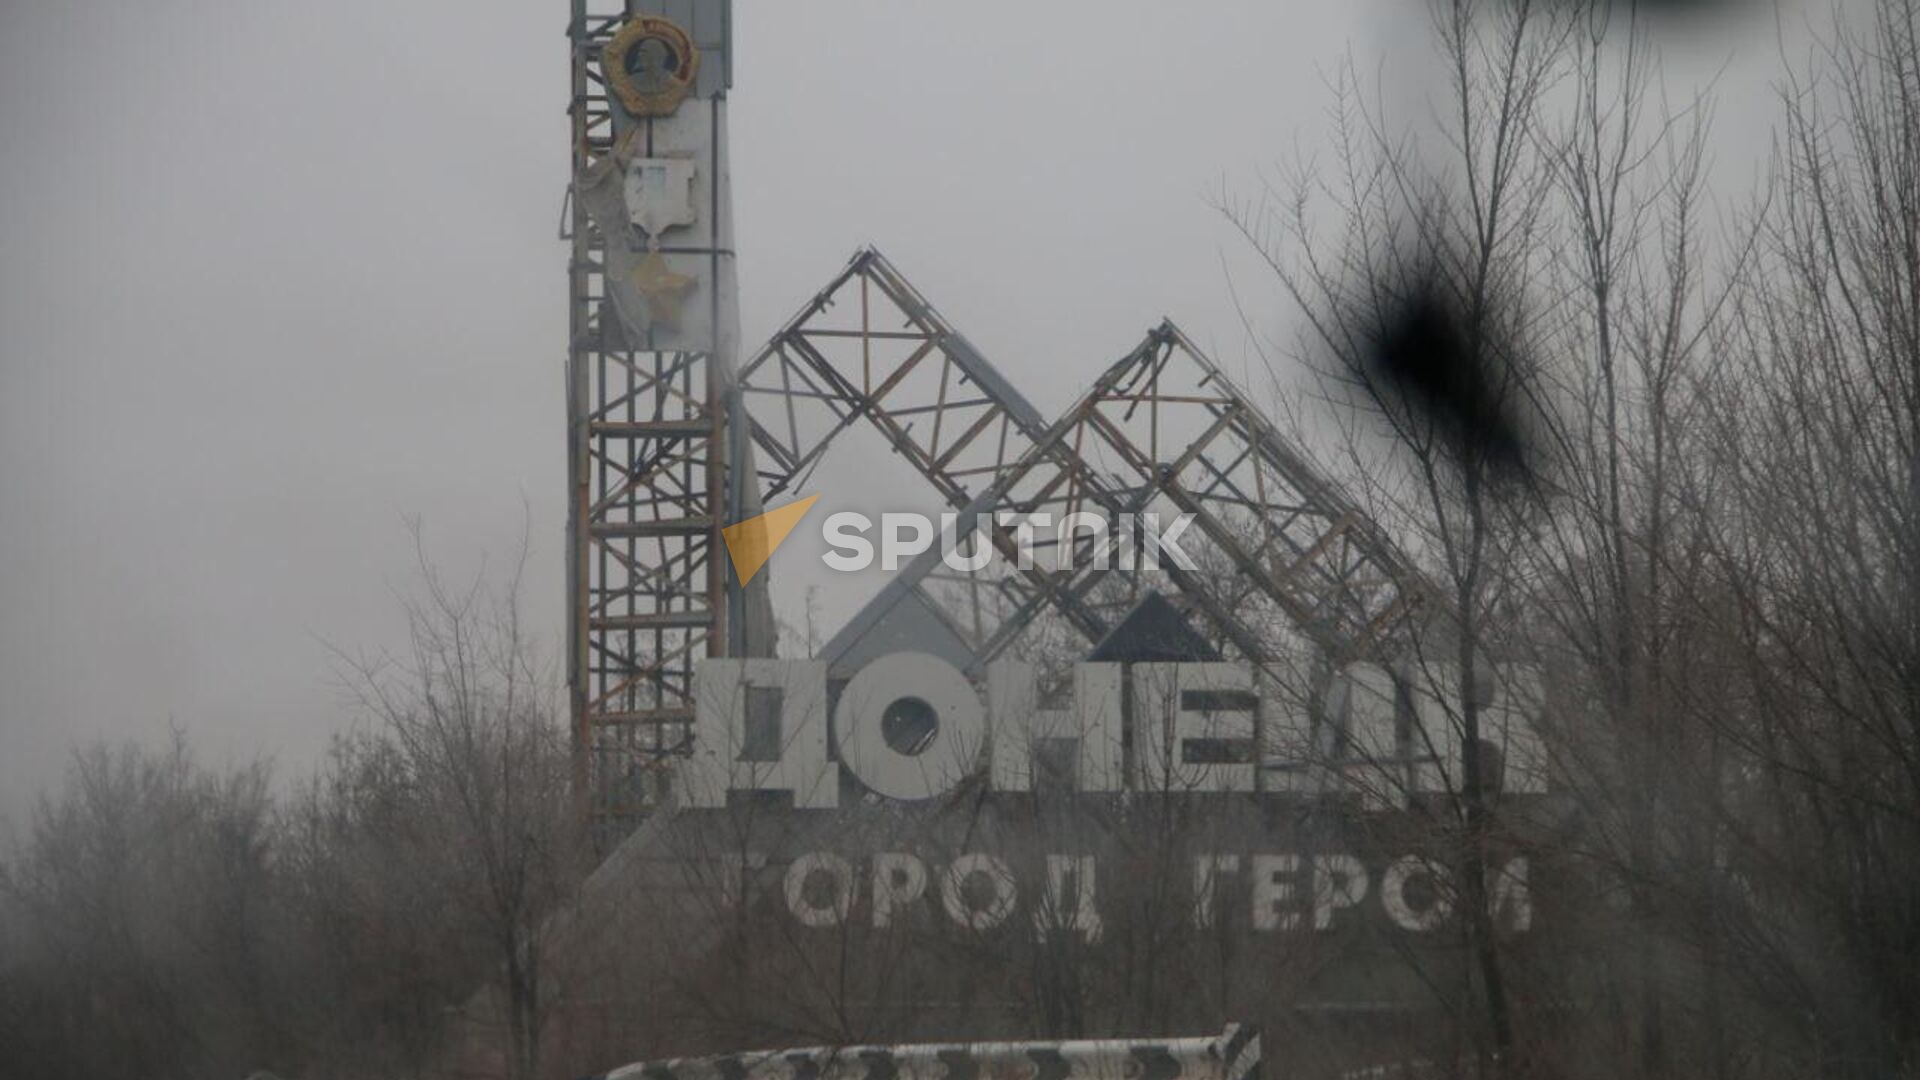 Донецк, январь 2023 года - Sputnik Беларусь, 1920, 15.01.2023